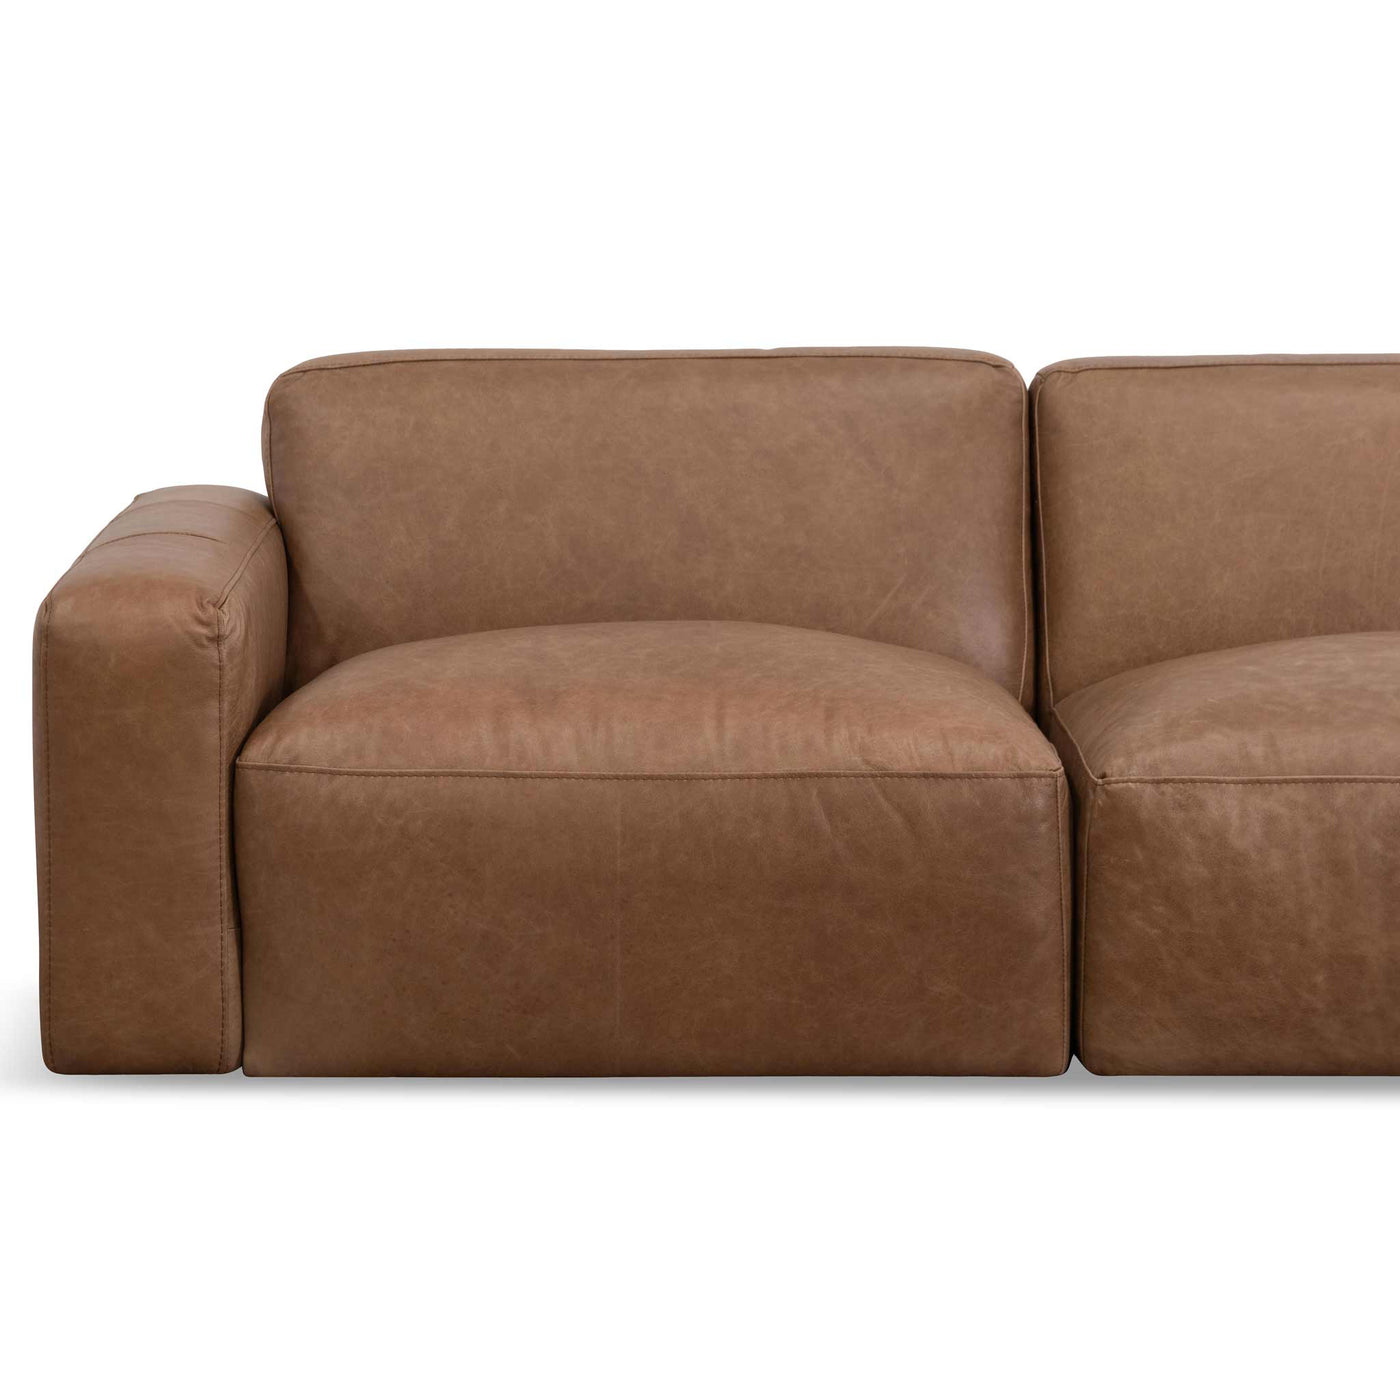 4 Seater Sofa - Saddle Brown